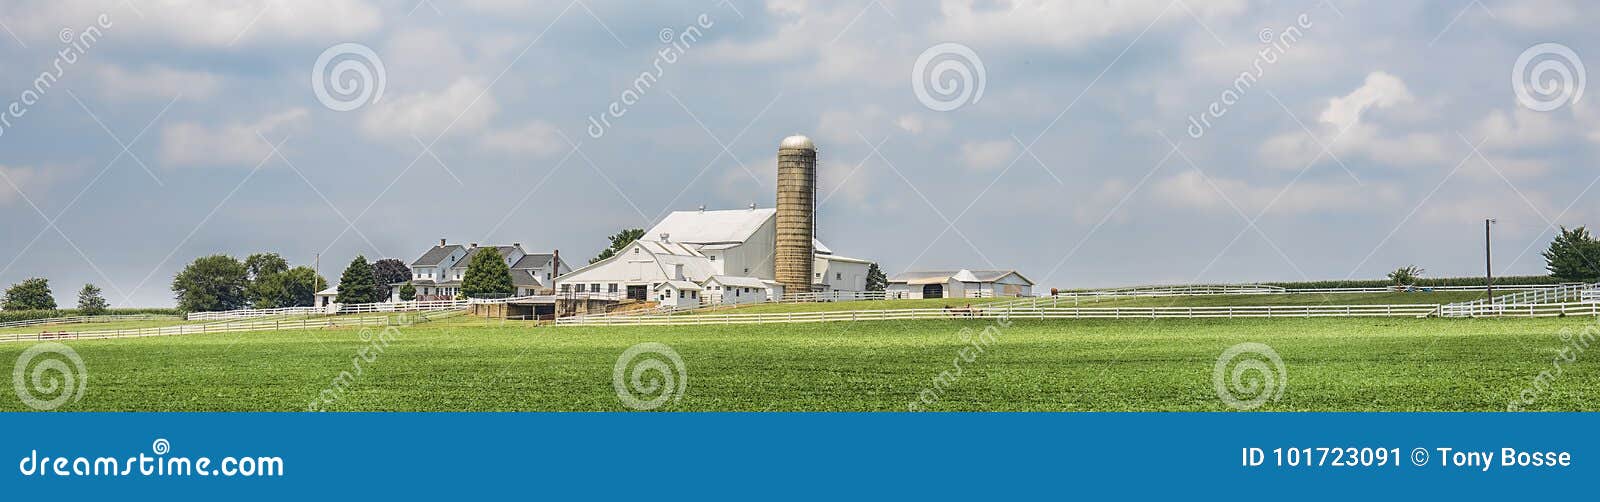 farm ranch panorama